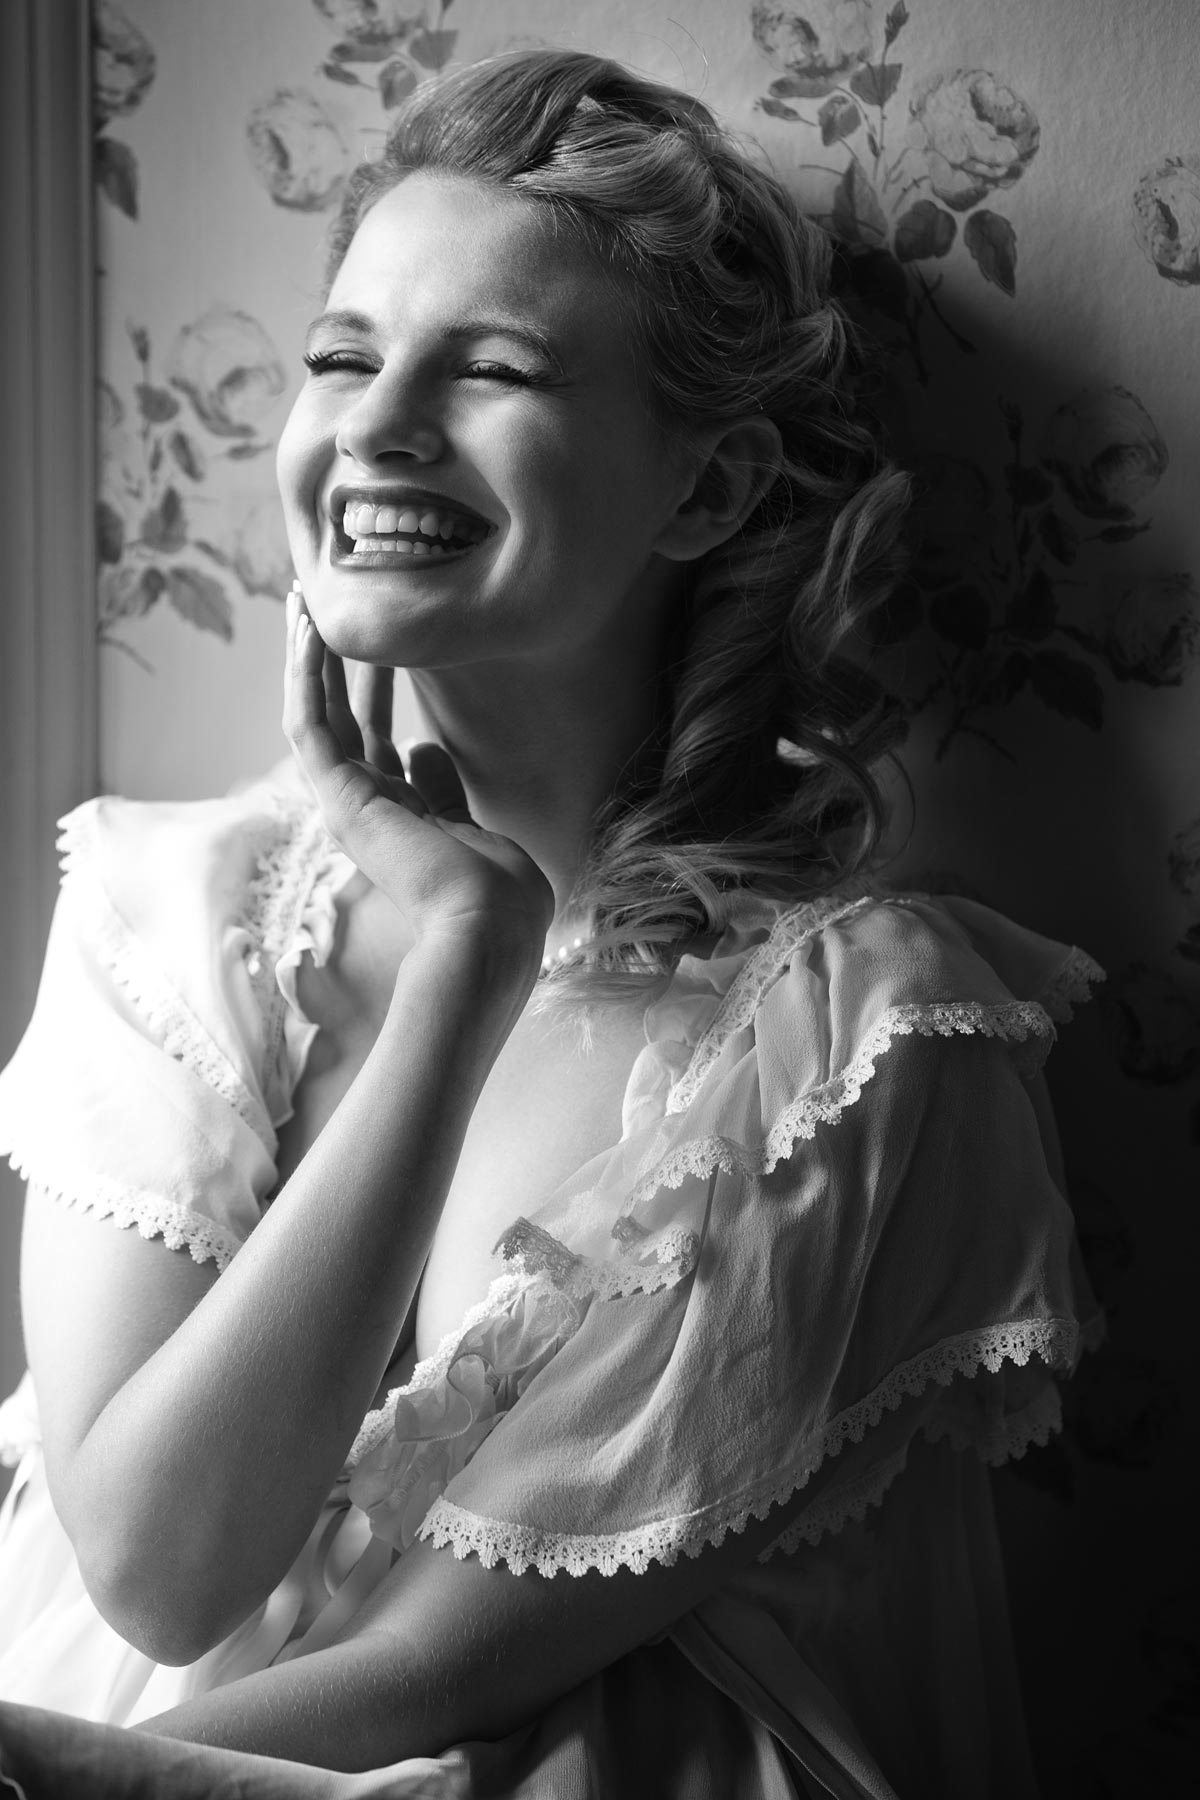 Chloe-Jasmine Whichello laughing in an English Rose setting. Mono print